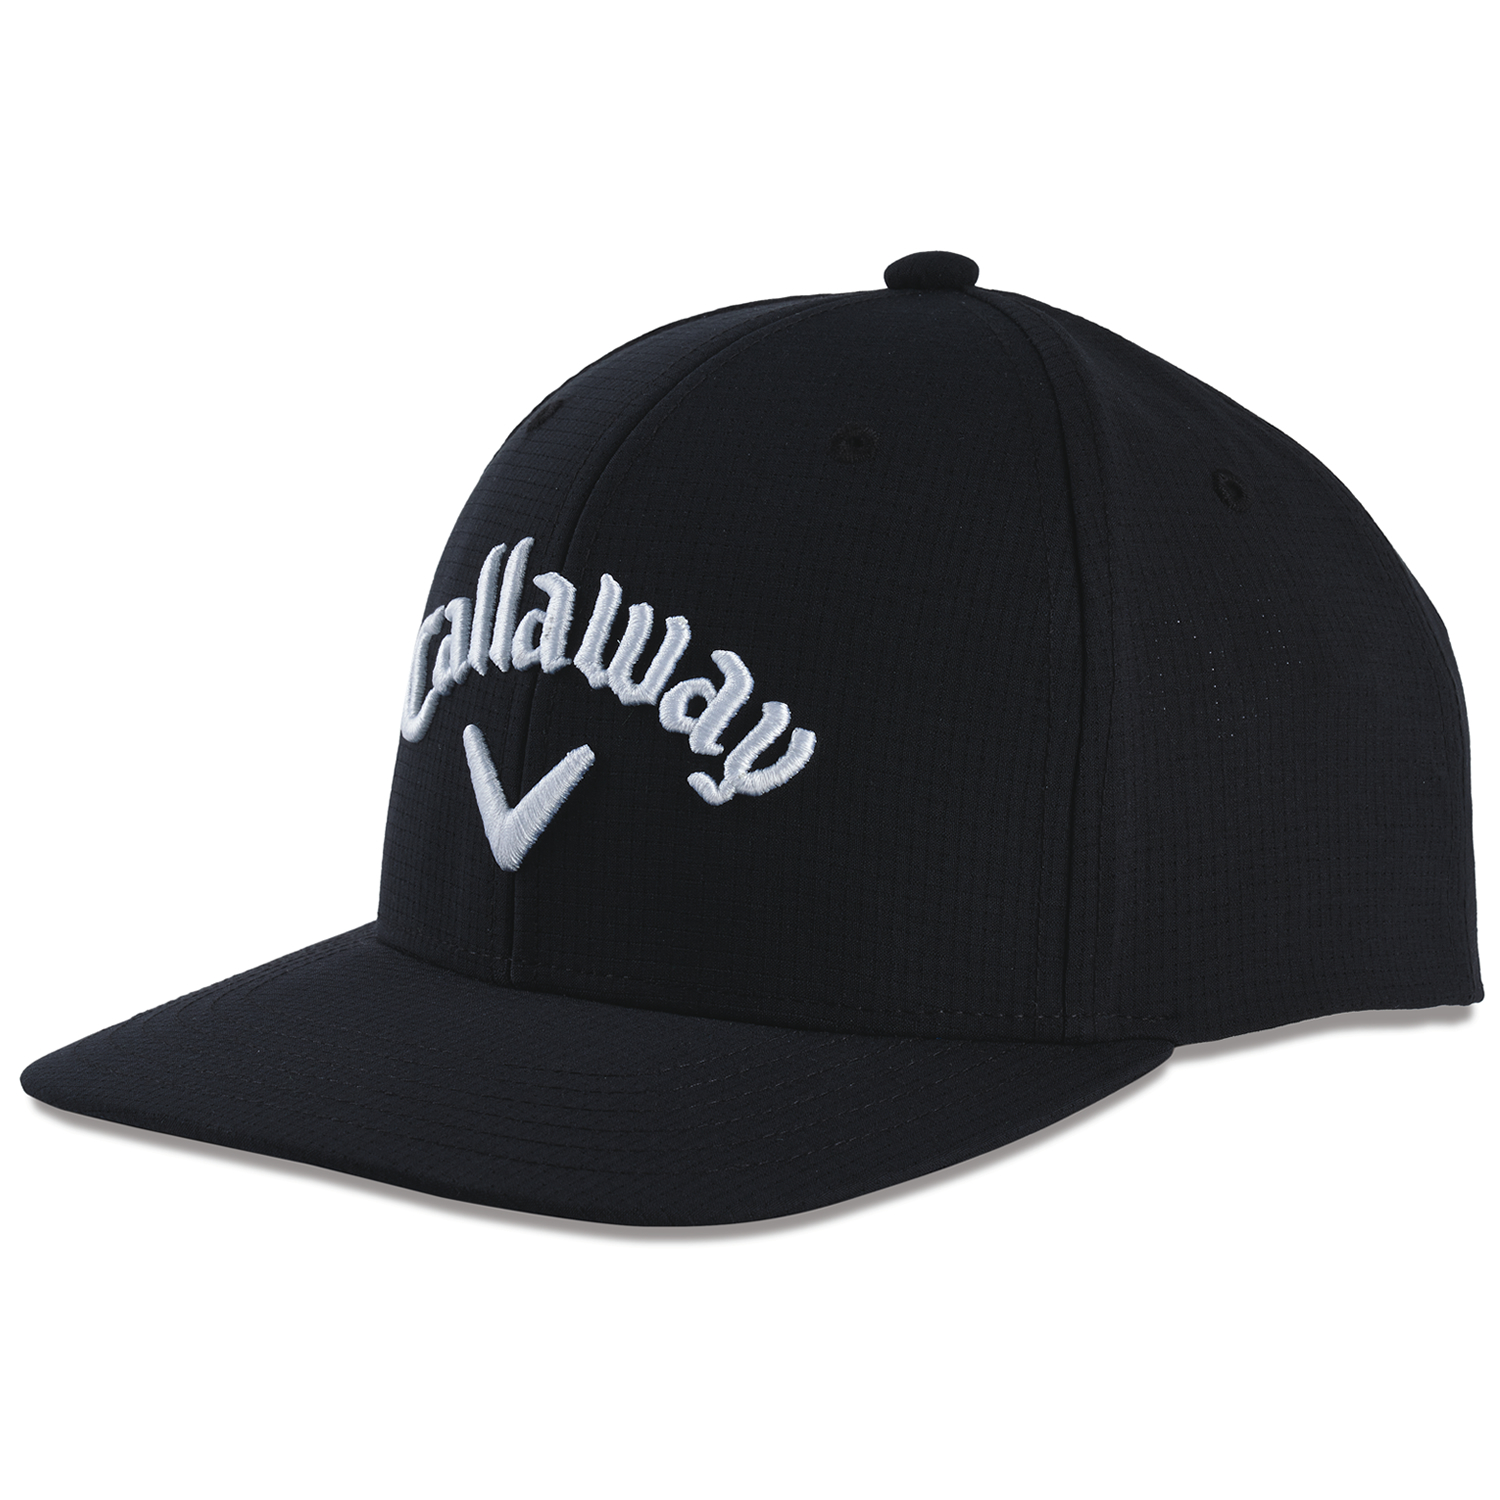 Callaway Tour Authentic Performance Pro (No Logo) Adjustable Baseball Cap